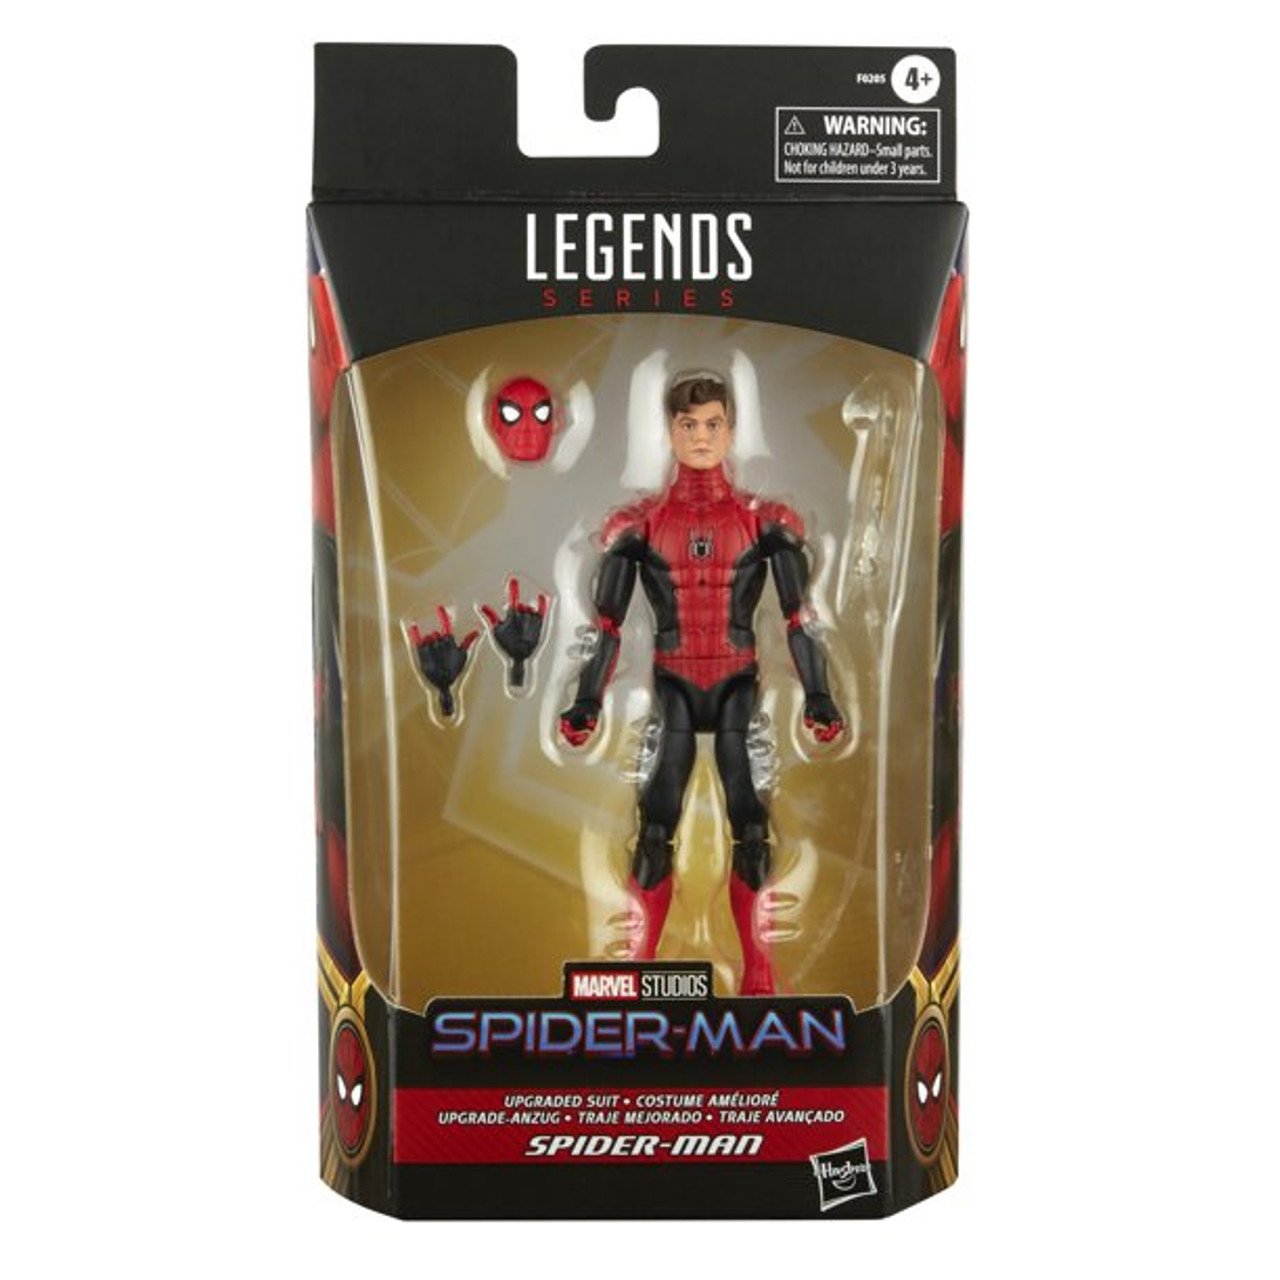 Marvel Studios Legends Series Spider-Man Upgraded Suit Action Figure 6" 